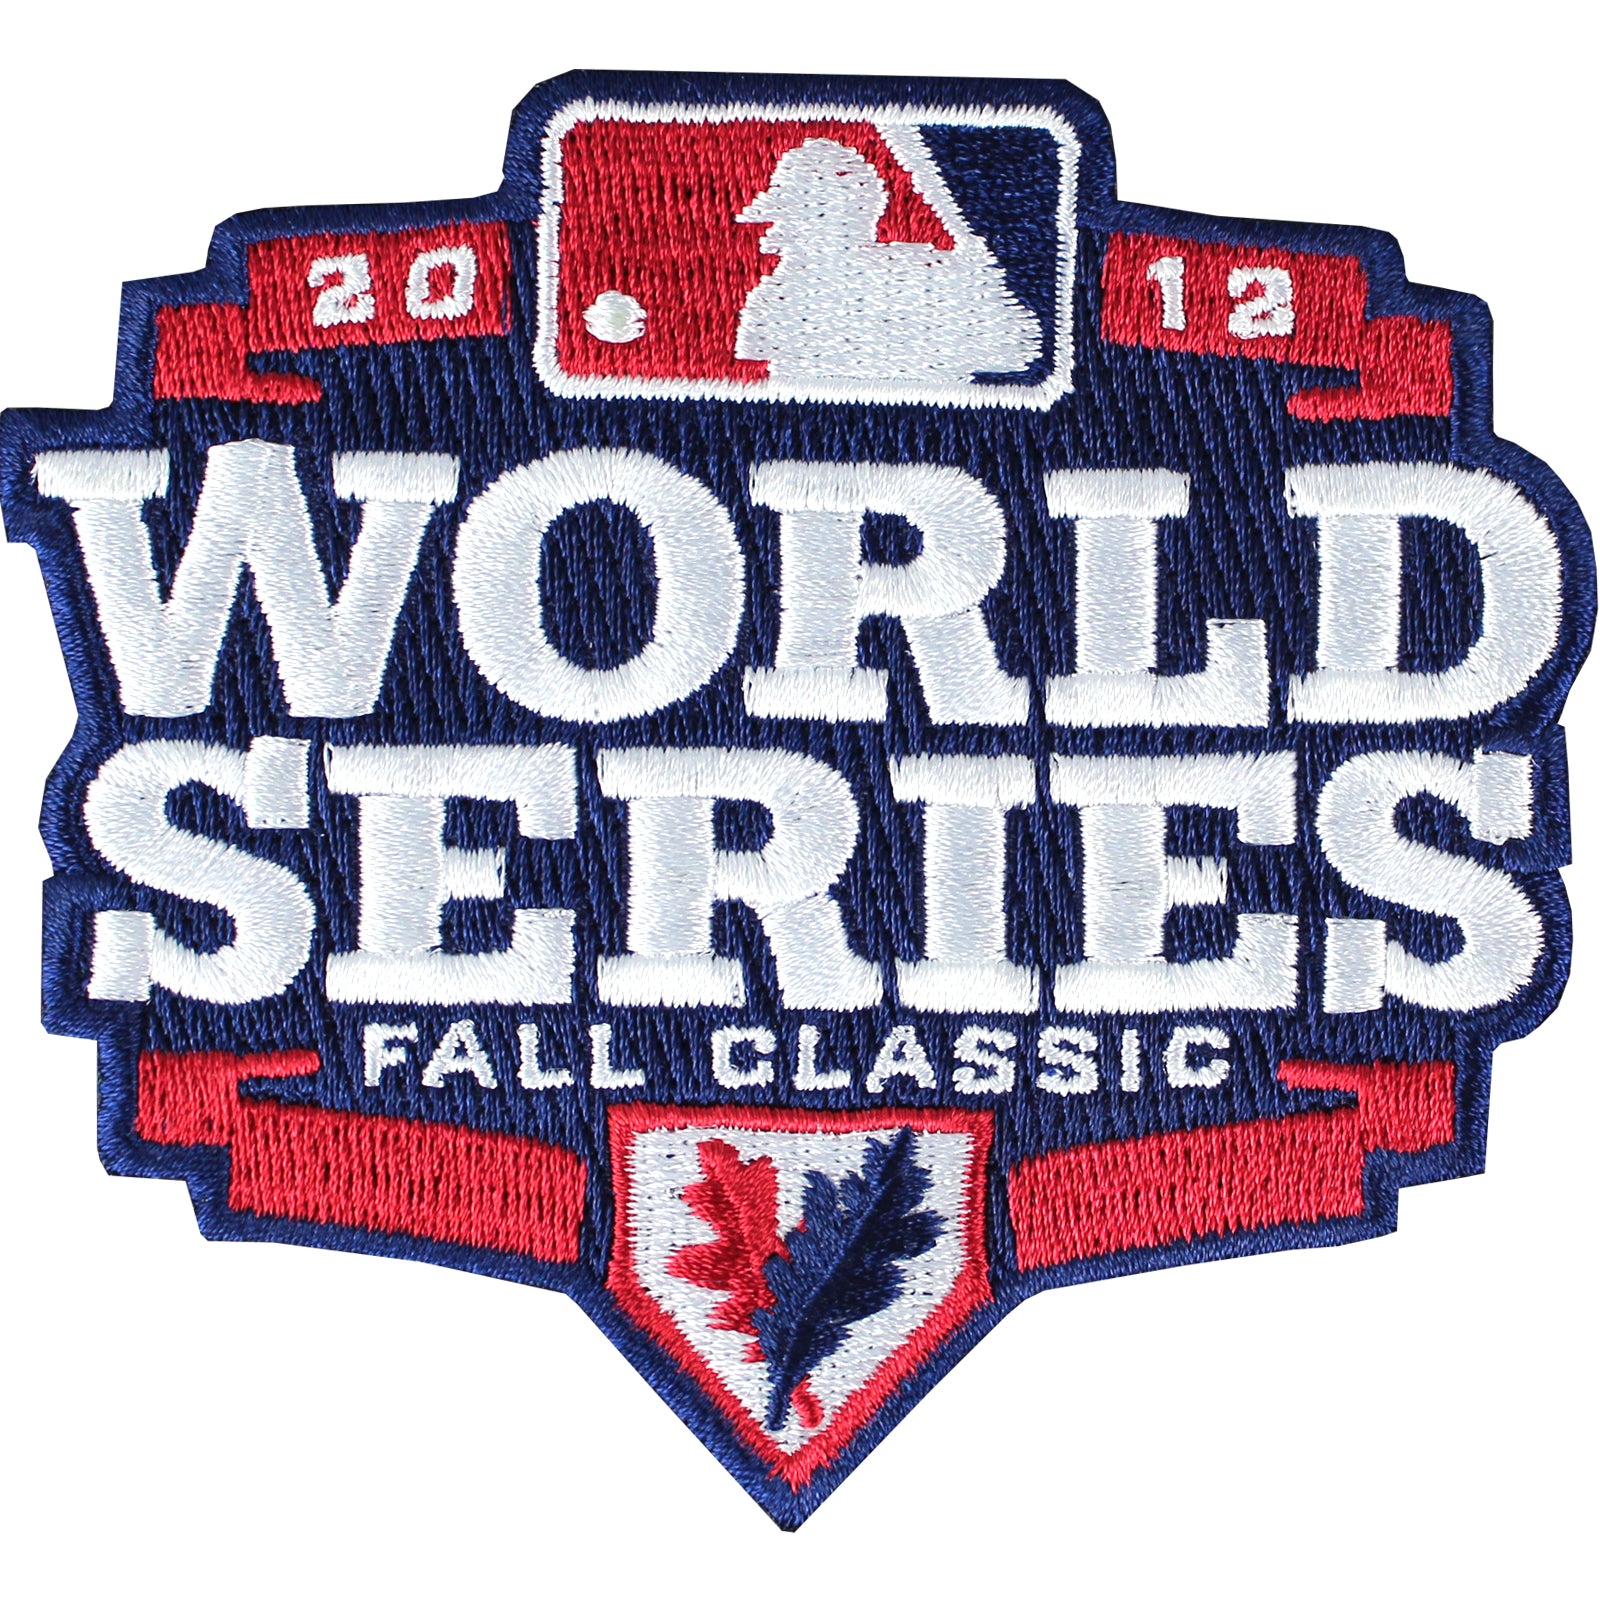 OFFICIAL 2010 WORLD SERIES SAN FRANCISCO GIANTS MLB EMBLEM PATCH